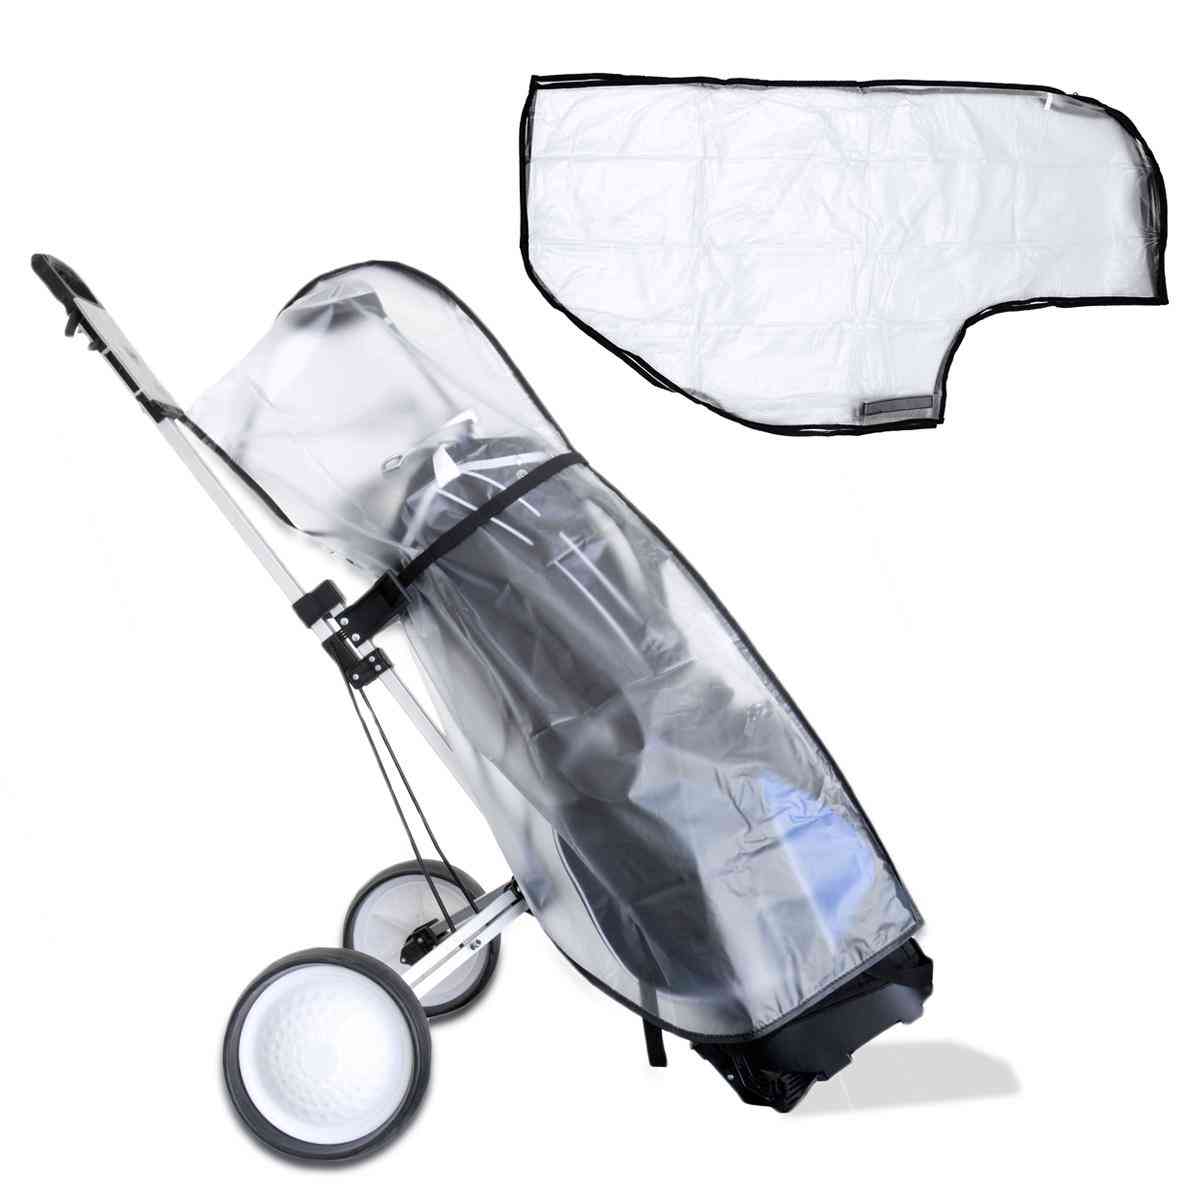 Pvc Golf Bag, Golf Rain Cover Shield For Outdoor Rod Protector